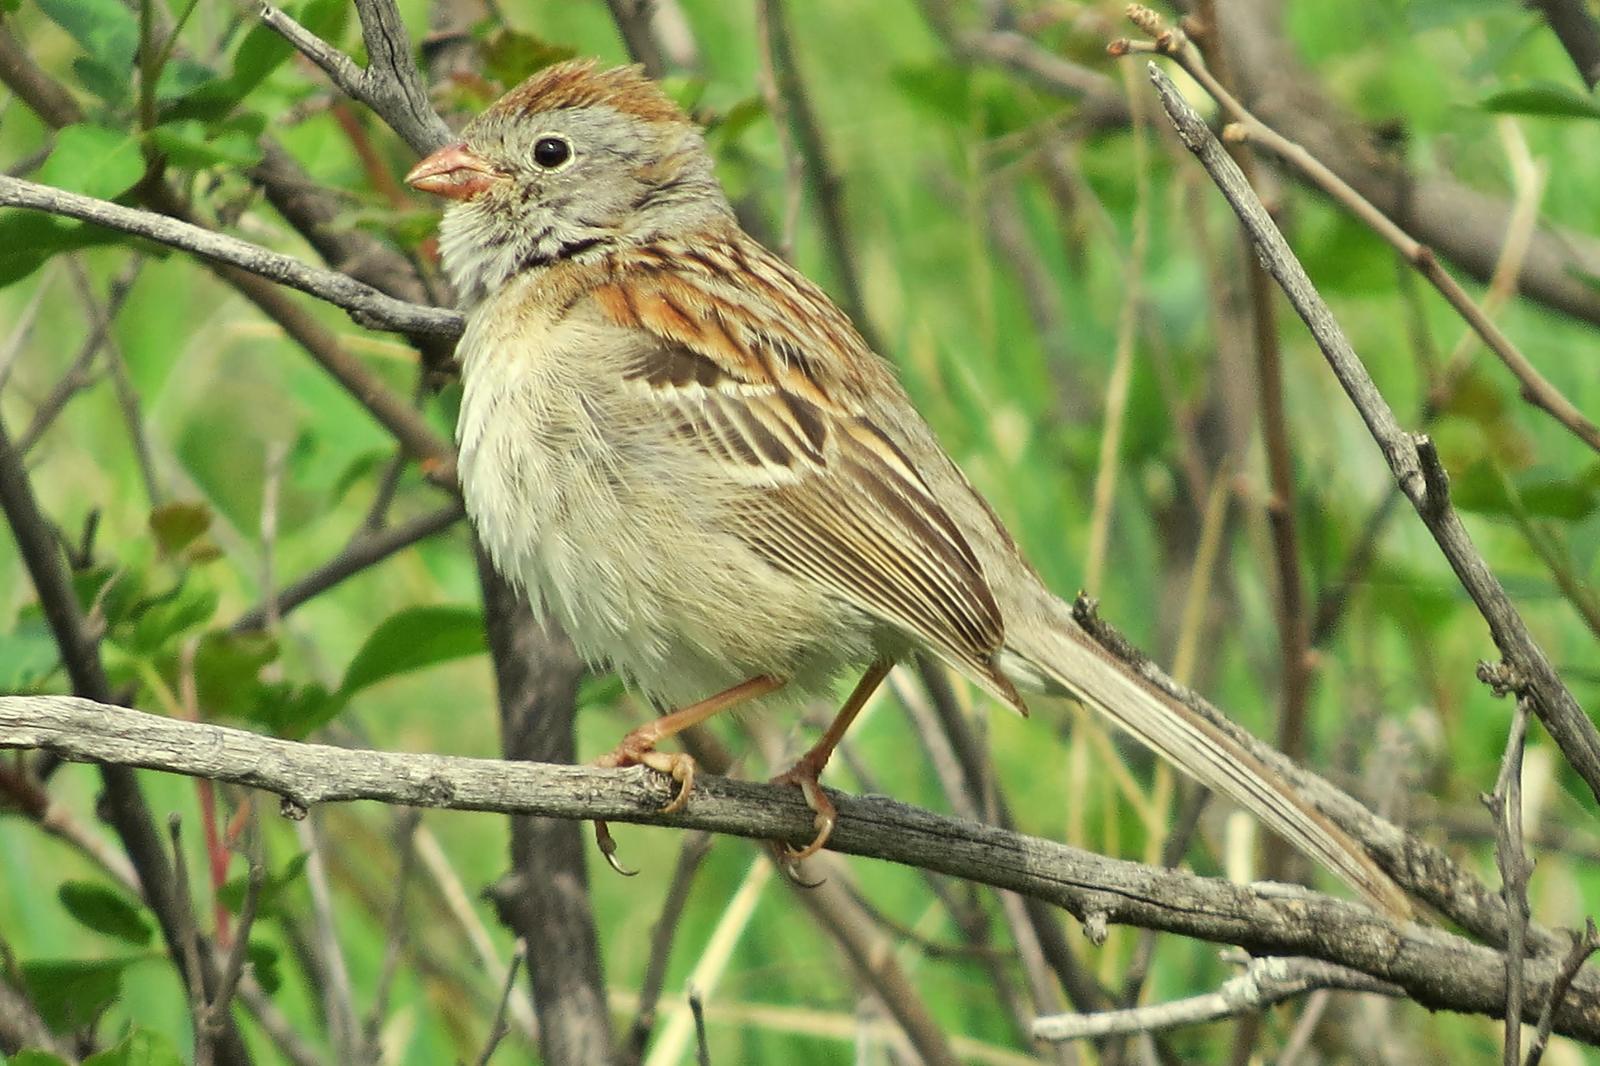 Field Sparrow Photo by Bob Neugebauer